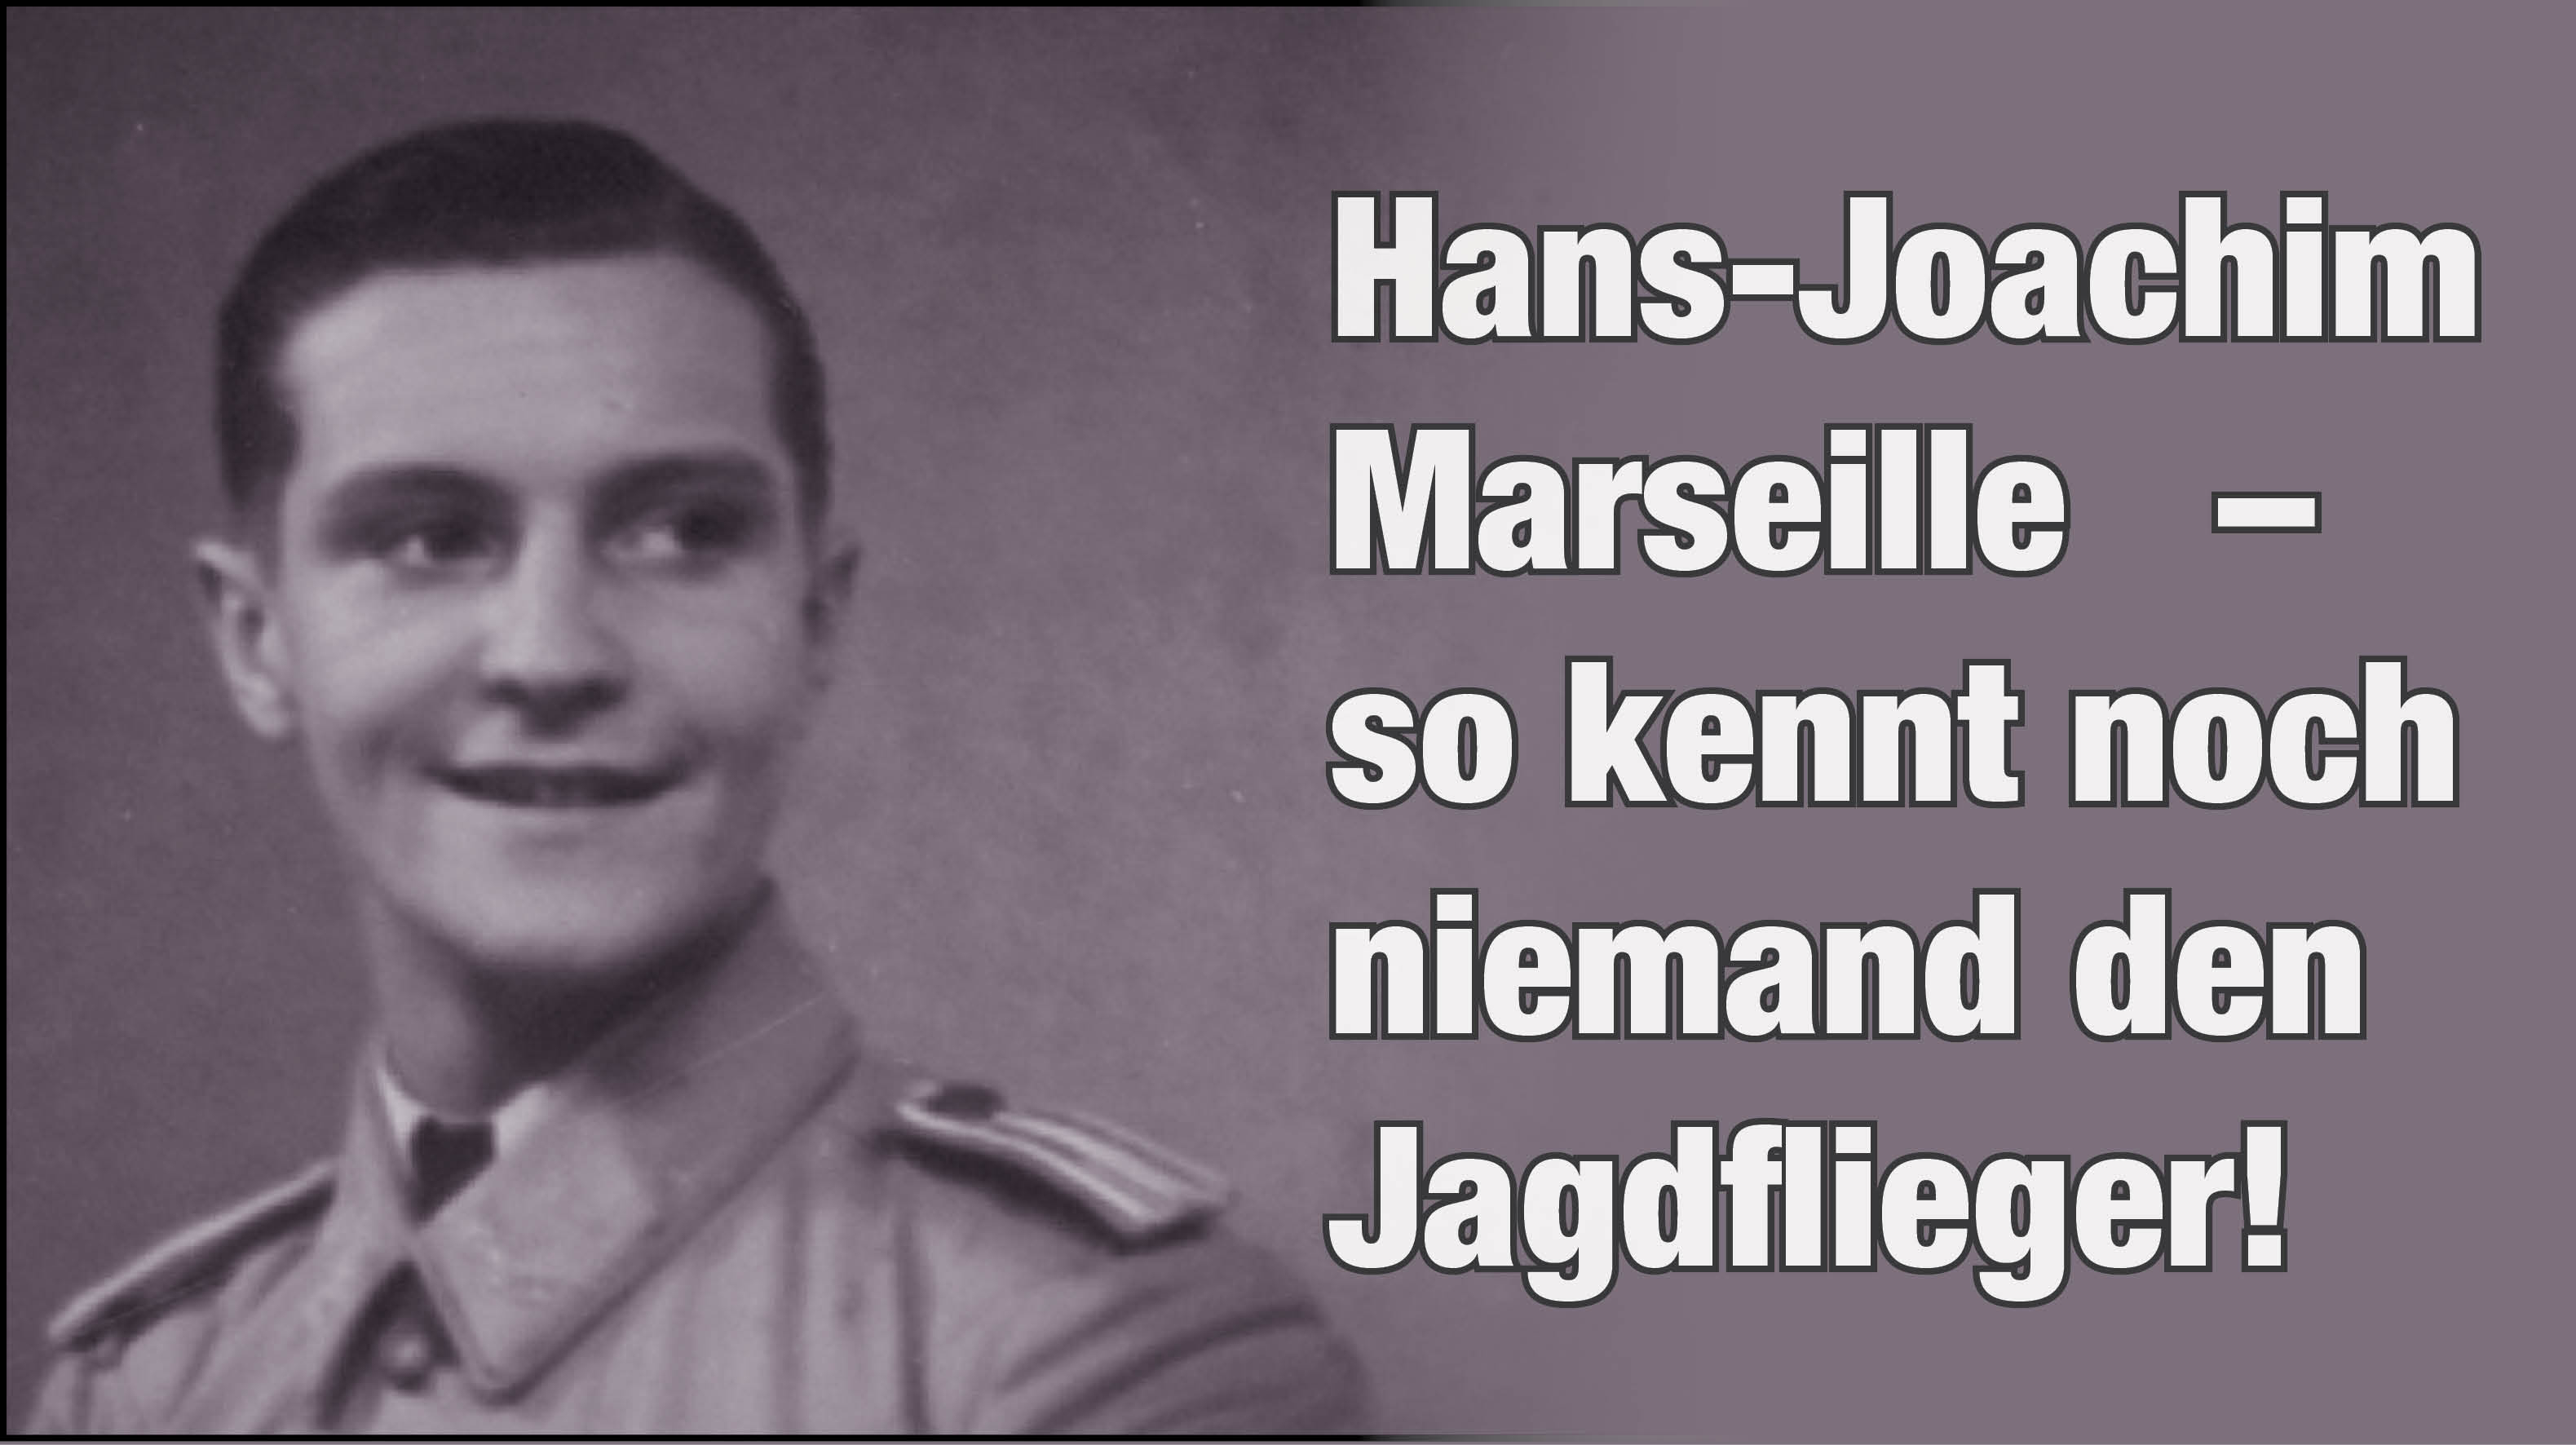 Hans-Joachim Marseille - So kennt noch niemand den Jagdflieger!